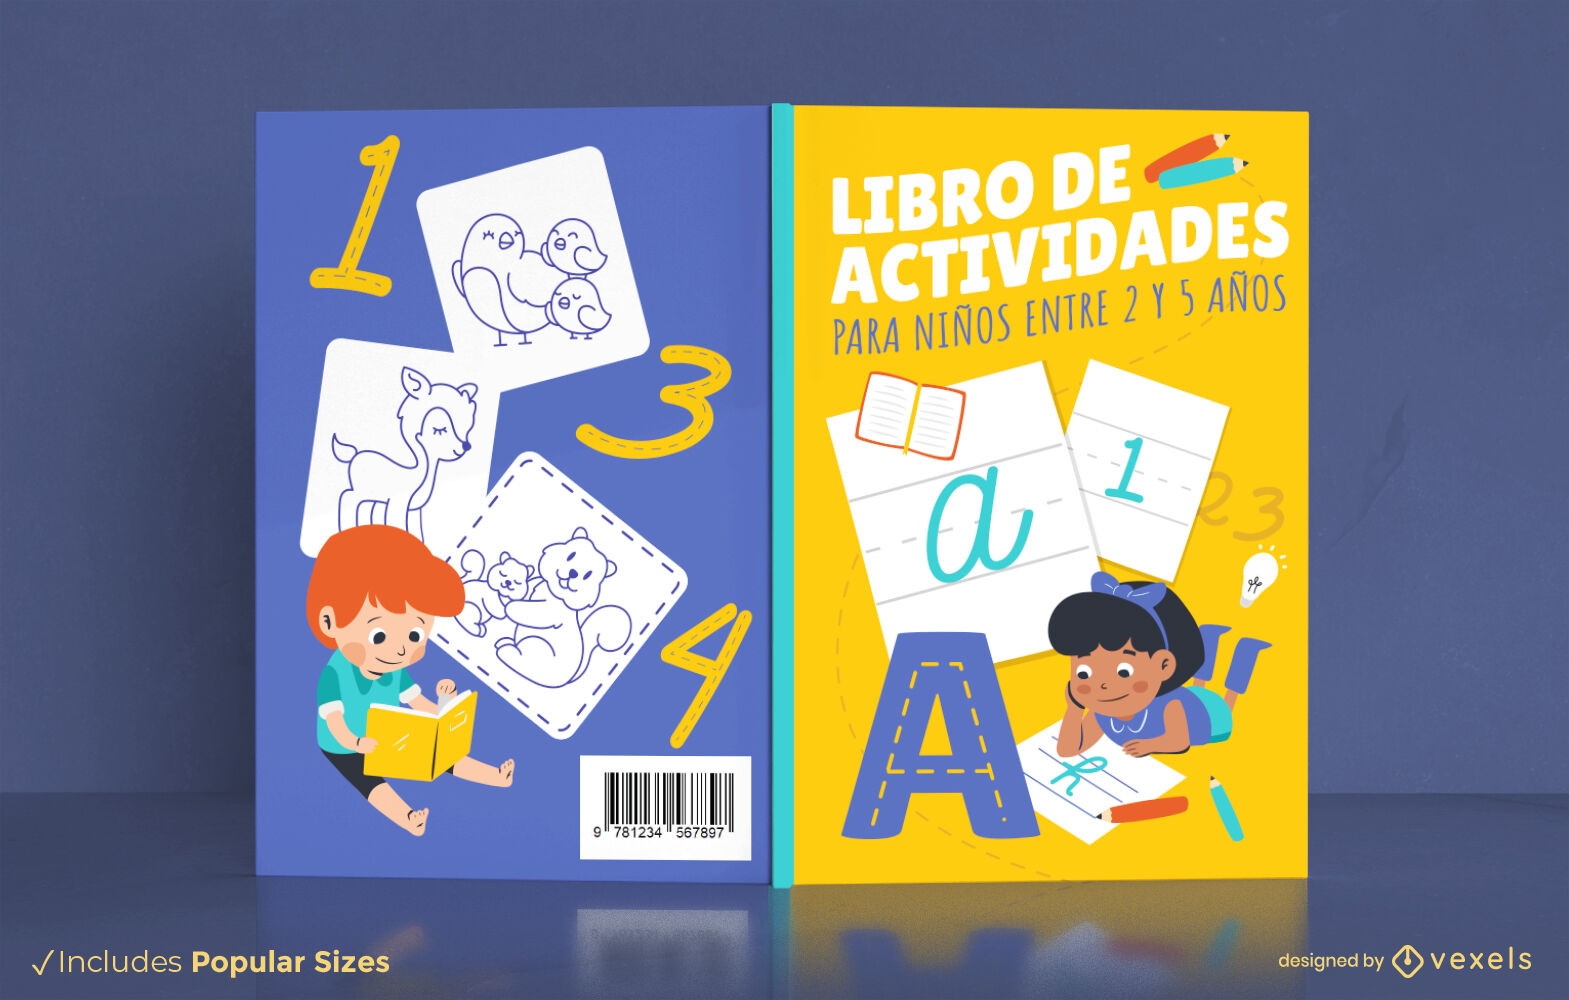 Libro de actividades para niños diseño de portada de libro en español